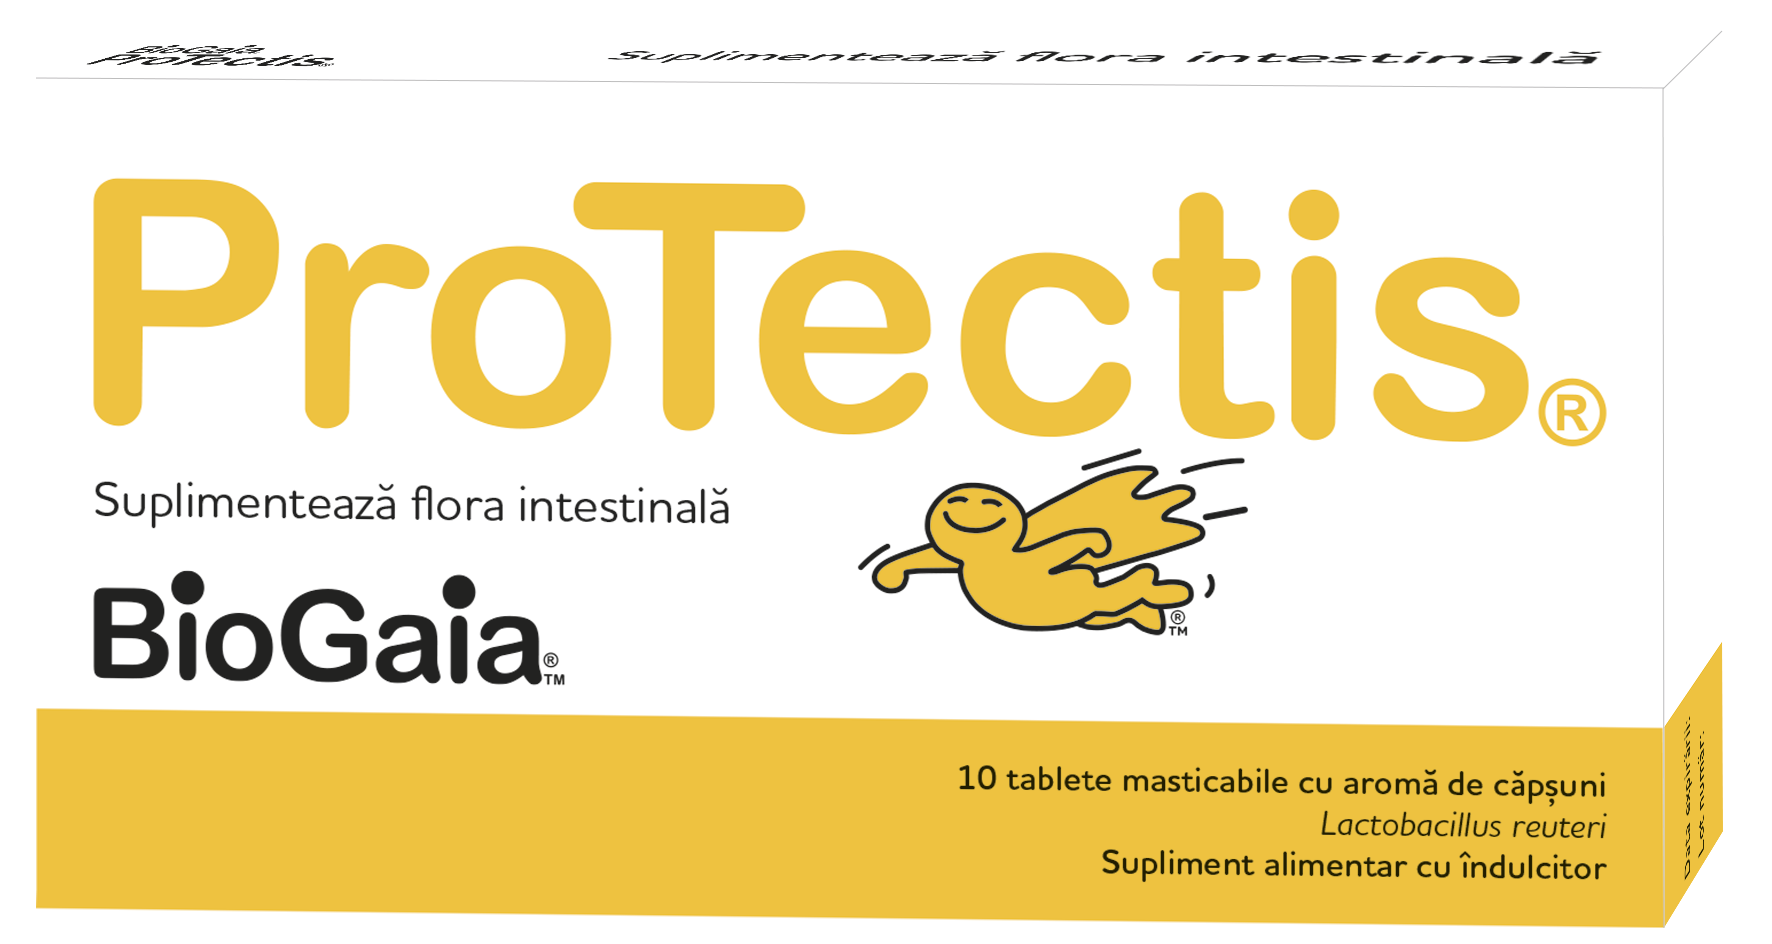 Afecțiuni digestive - PROTECTIS PROBIOTIC CAPSUNI 10CP. MASTICABILE EWOPHARMA, axafarm.ro